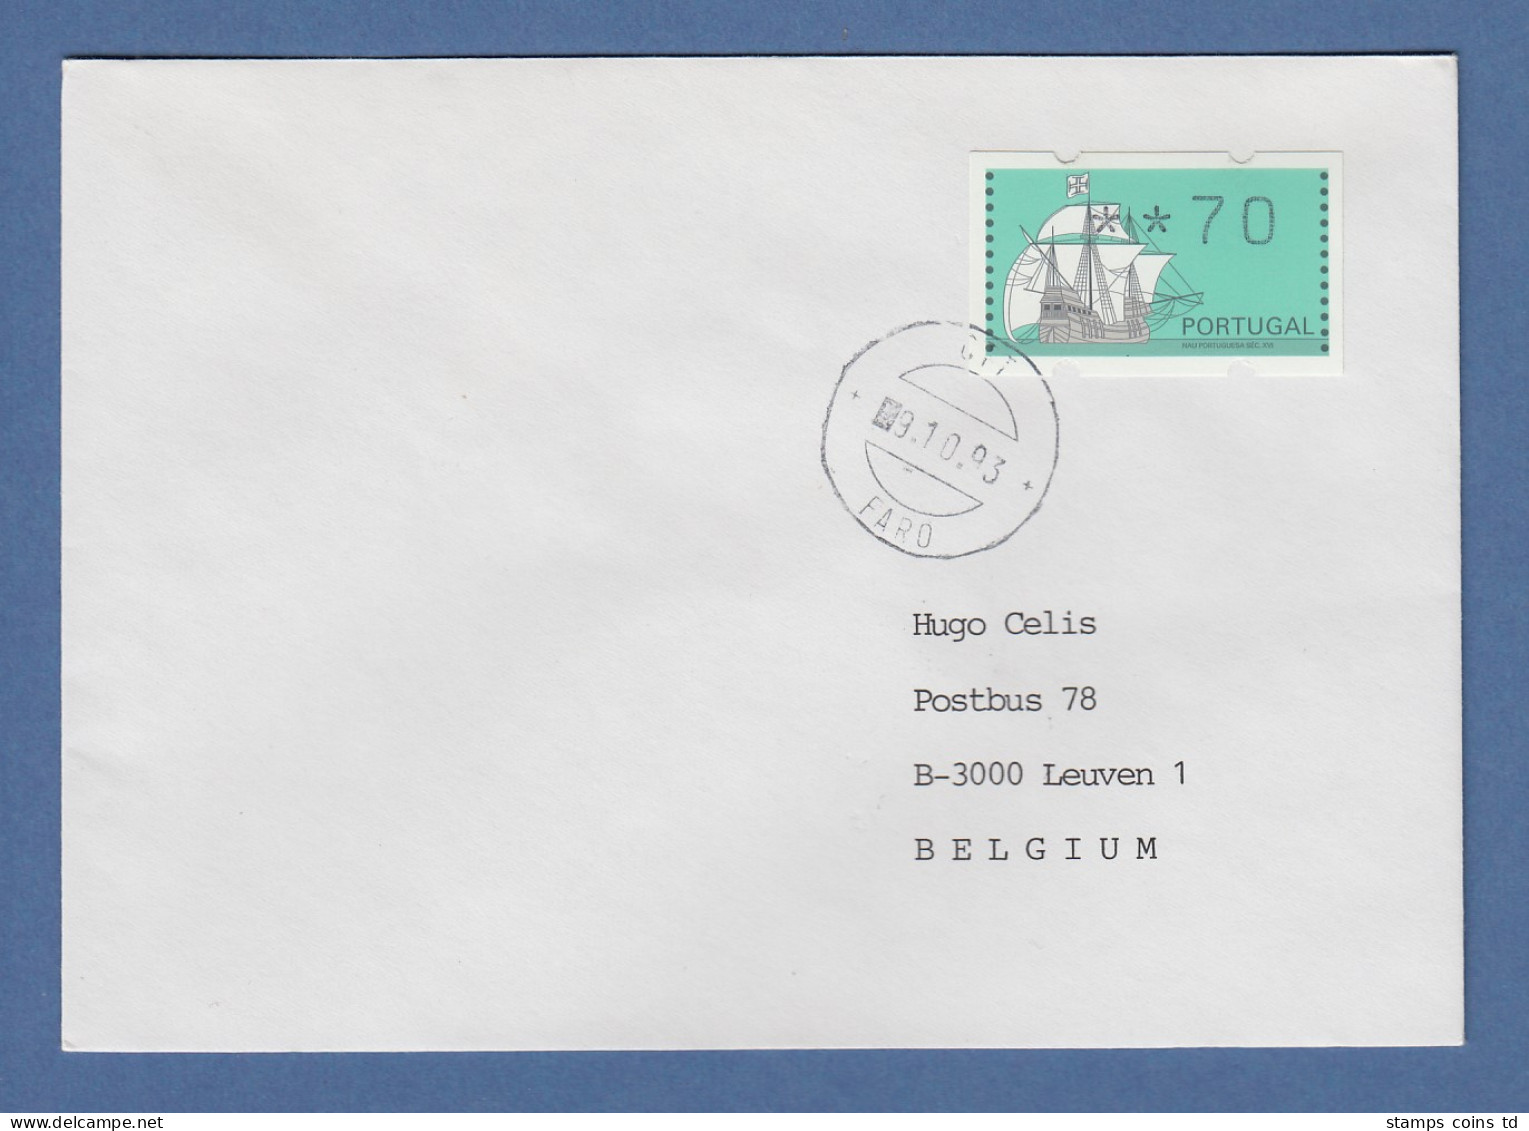 Portugal 1993 ATM Nau Mi-Nr. 7Z1 Wert 70 Auf FDC Nach Belgien - Machine Labels [ATM]